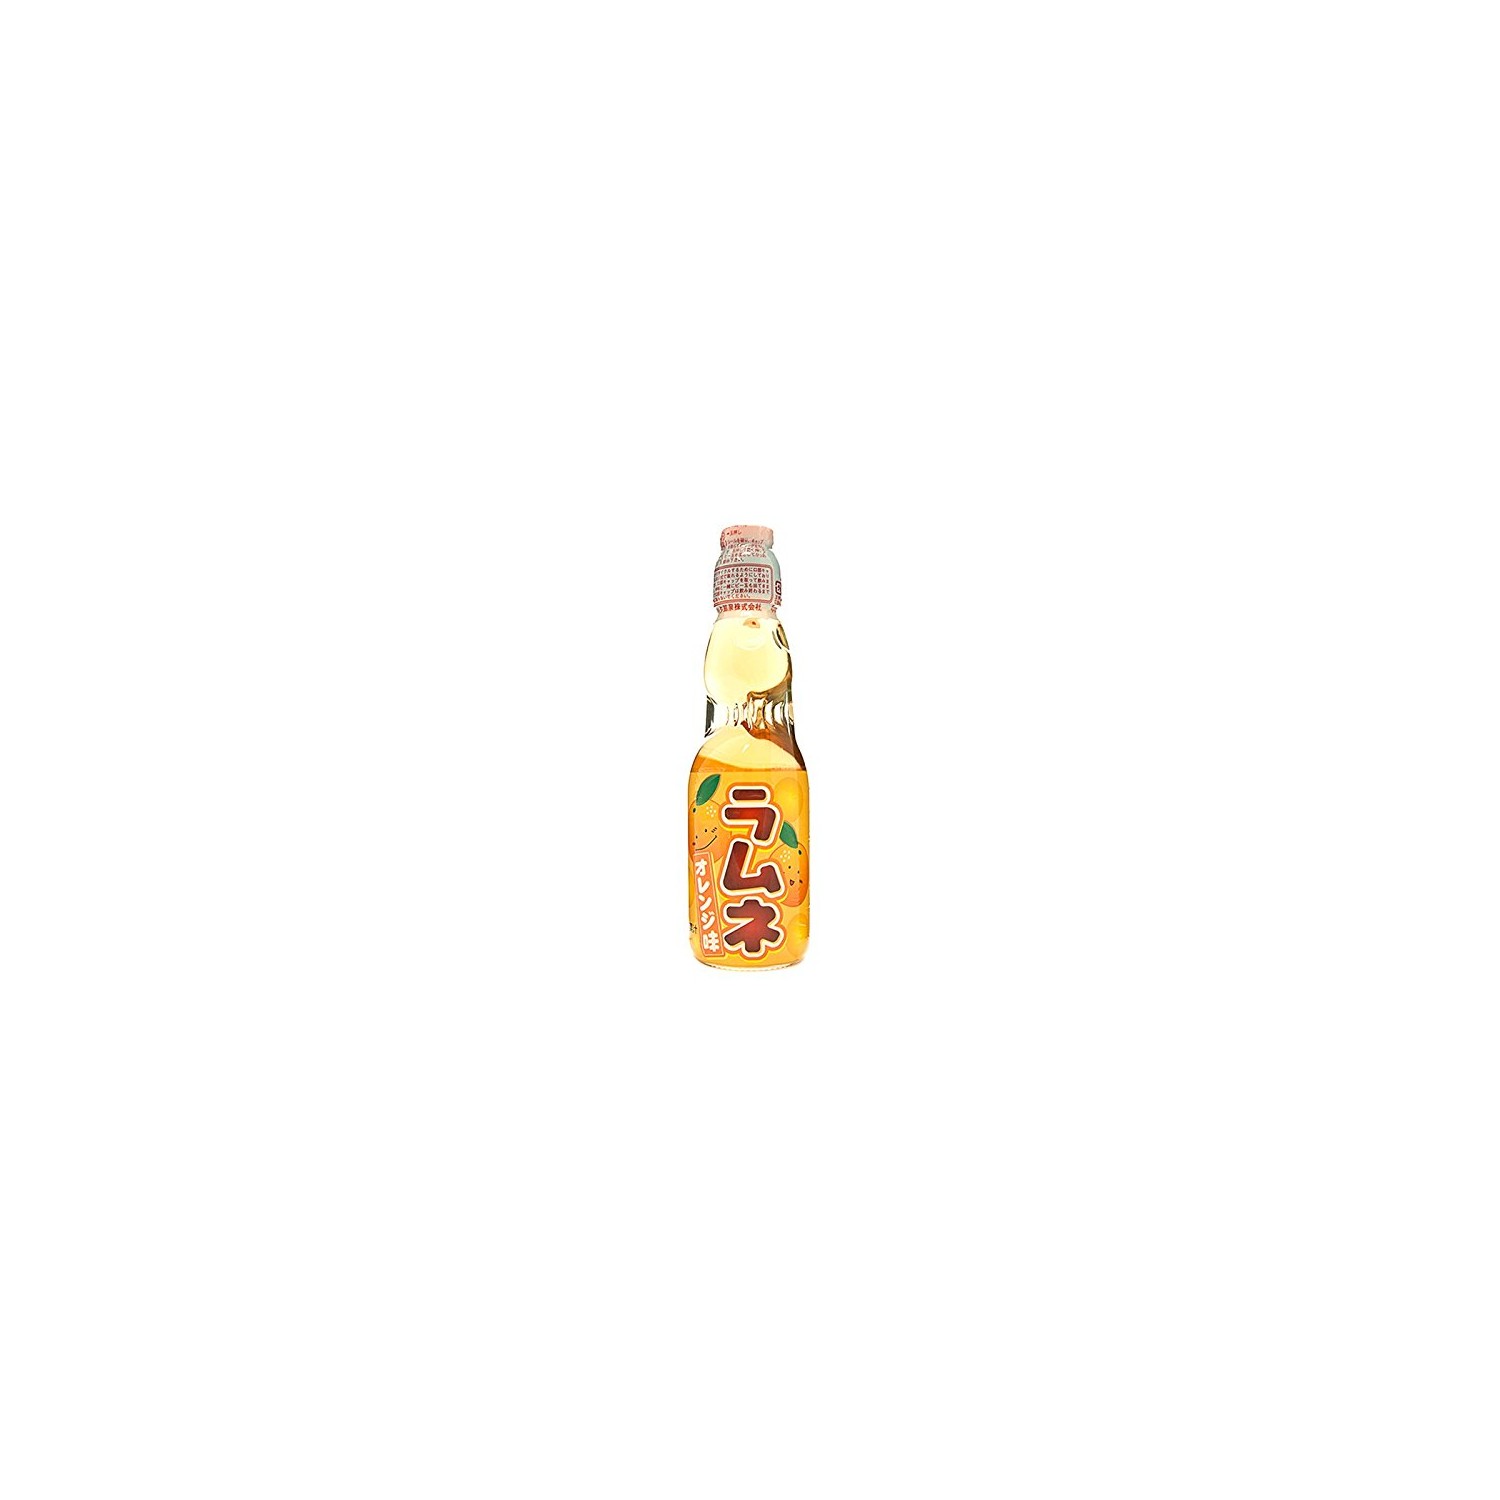 Hatakosen Ramune 200ml Orange Soda Flavour